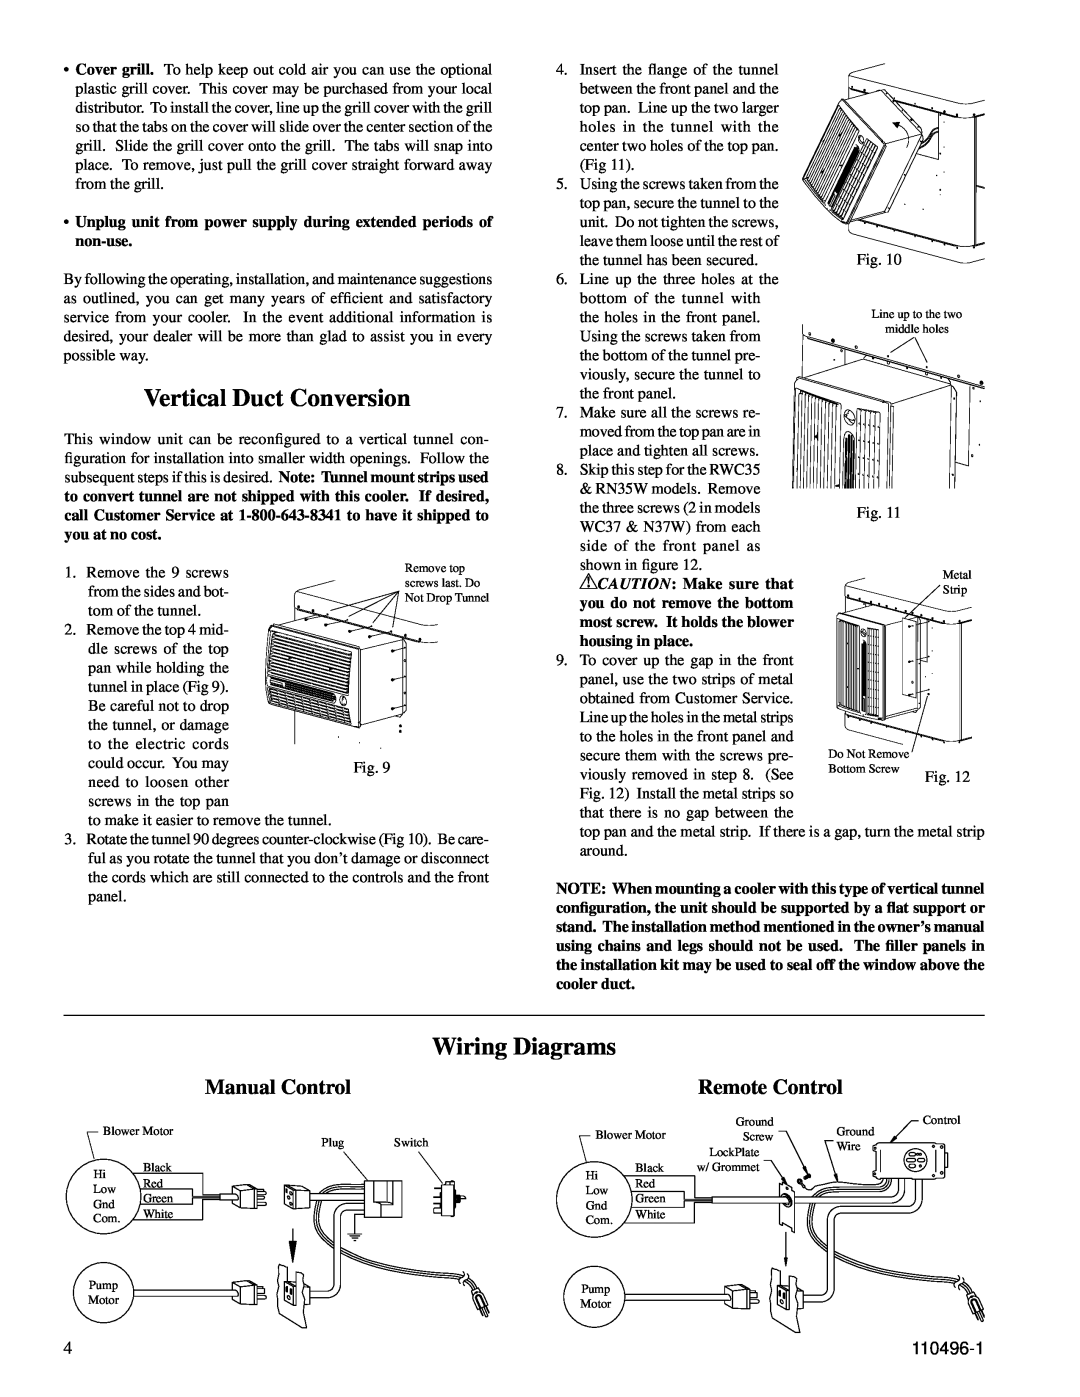 Essick Air RN50W manual Vertical Duct Conversion, Wiring Diagrams, Manual Control, Remote Control, 110496-1 